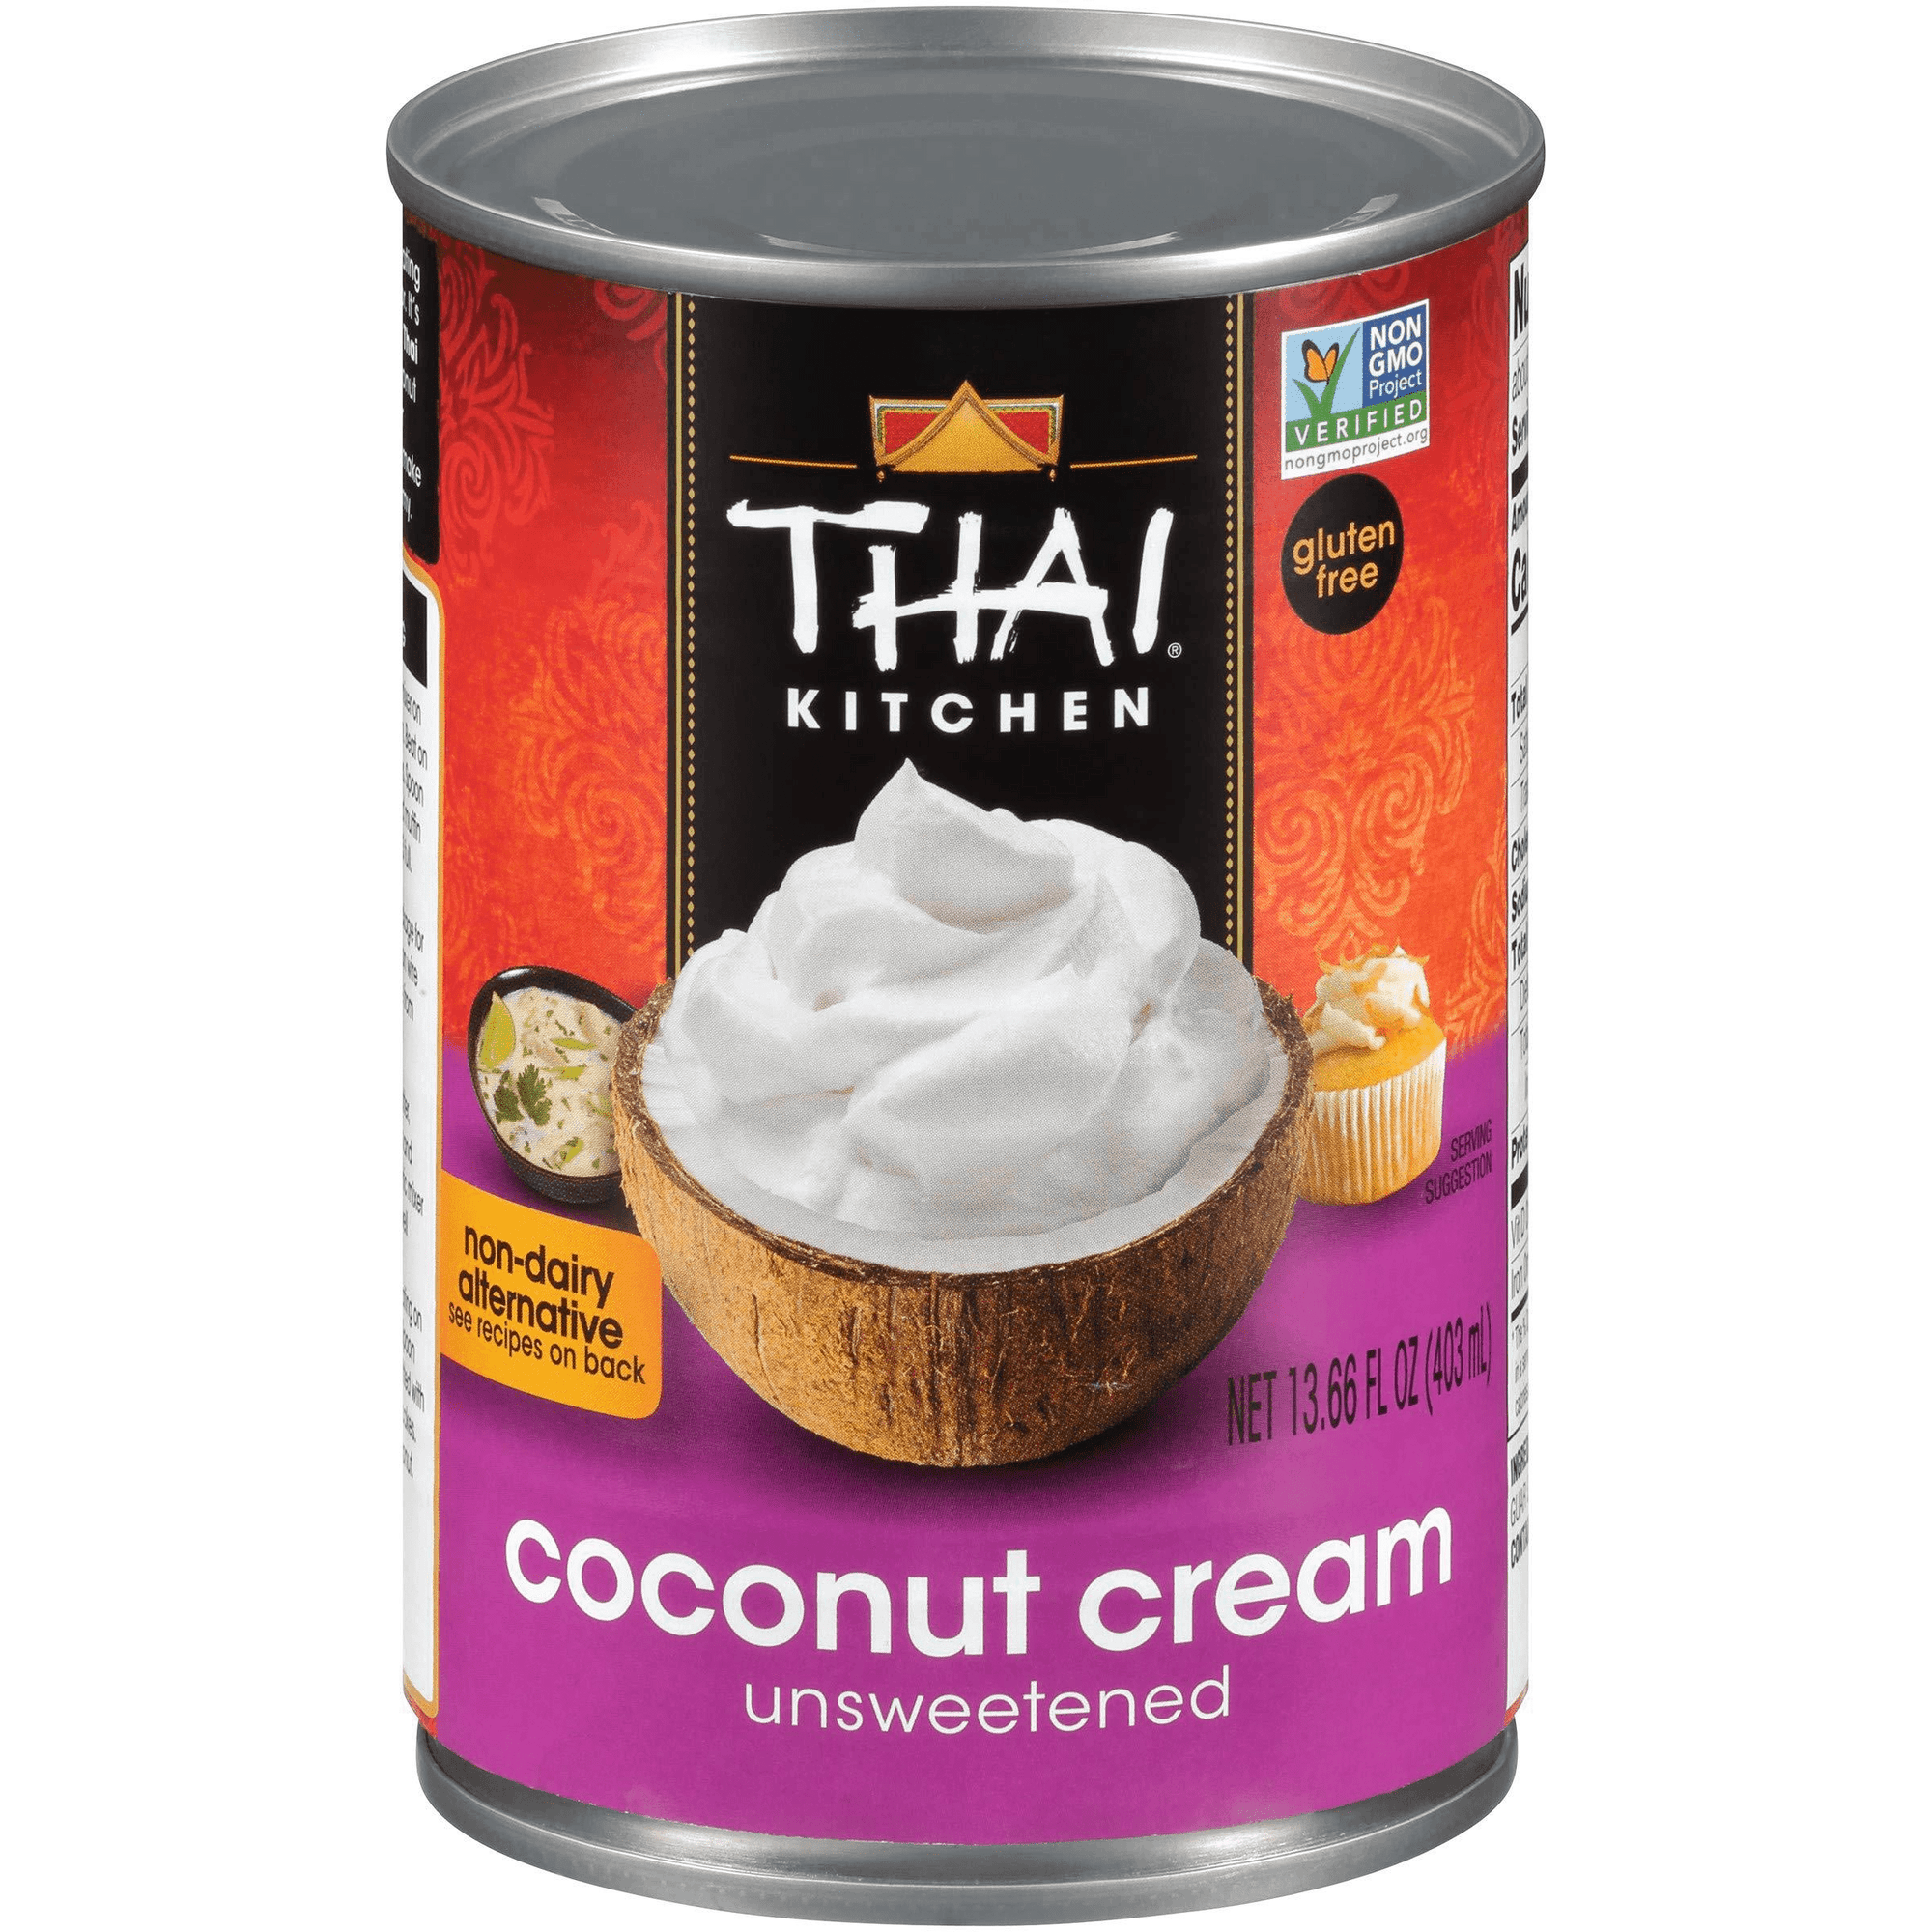 Thai Kitchen Coconut Cream, 13.66 Oz